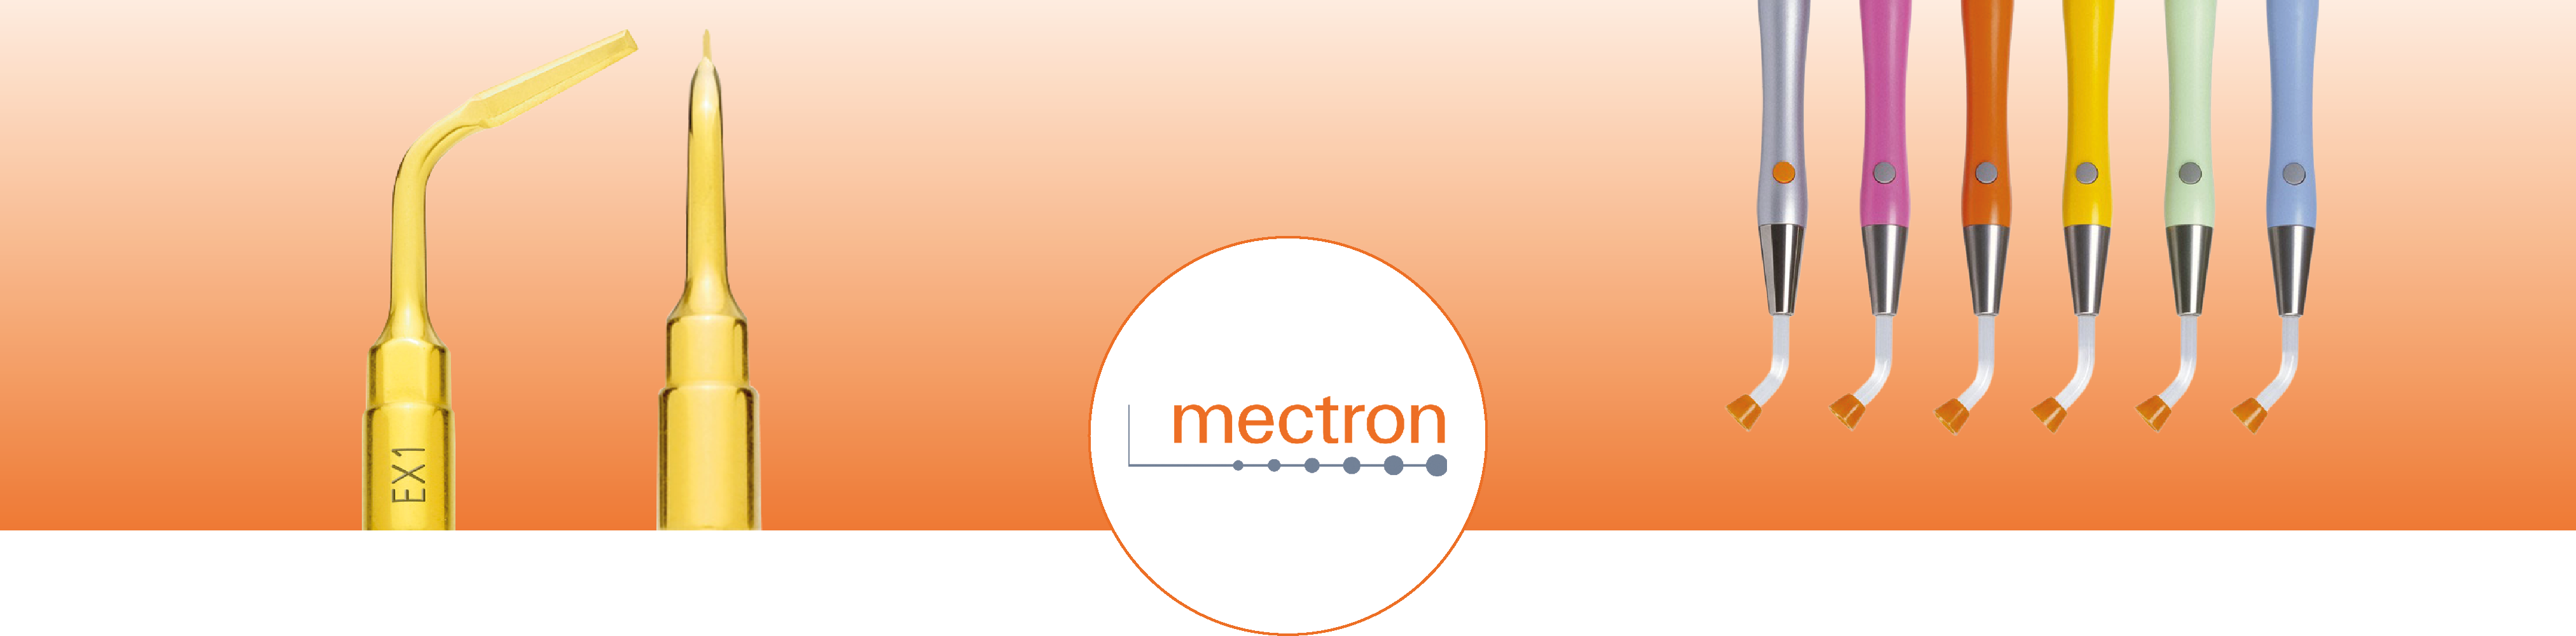 banner_mectron